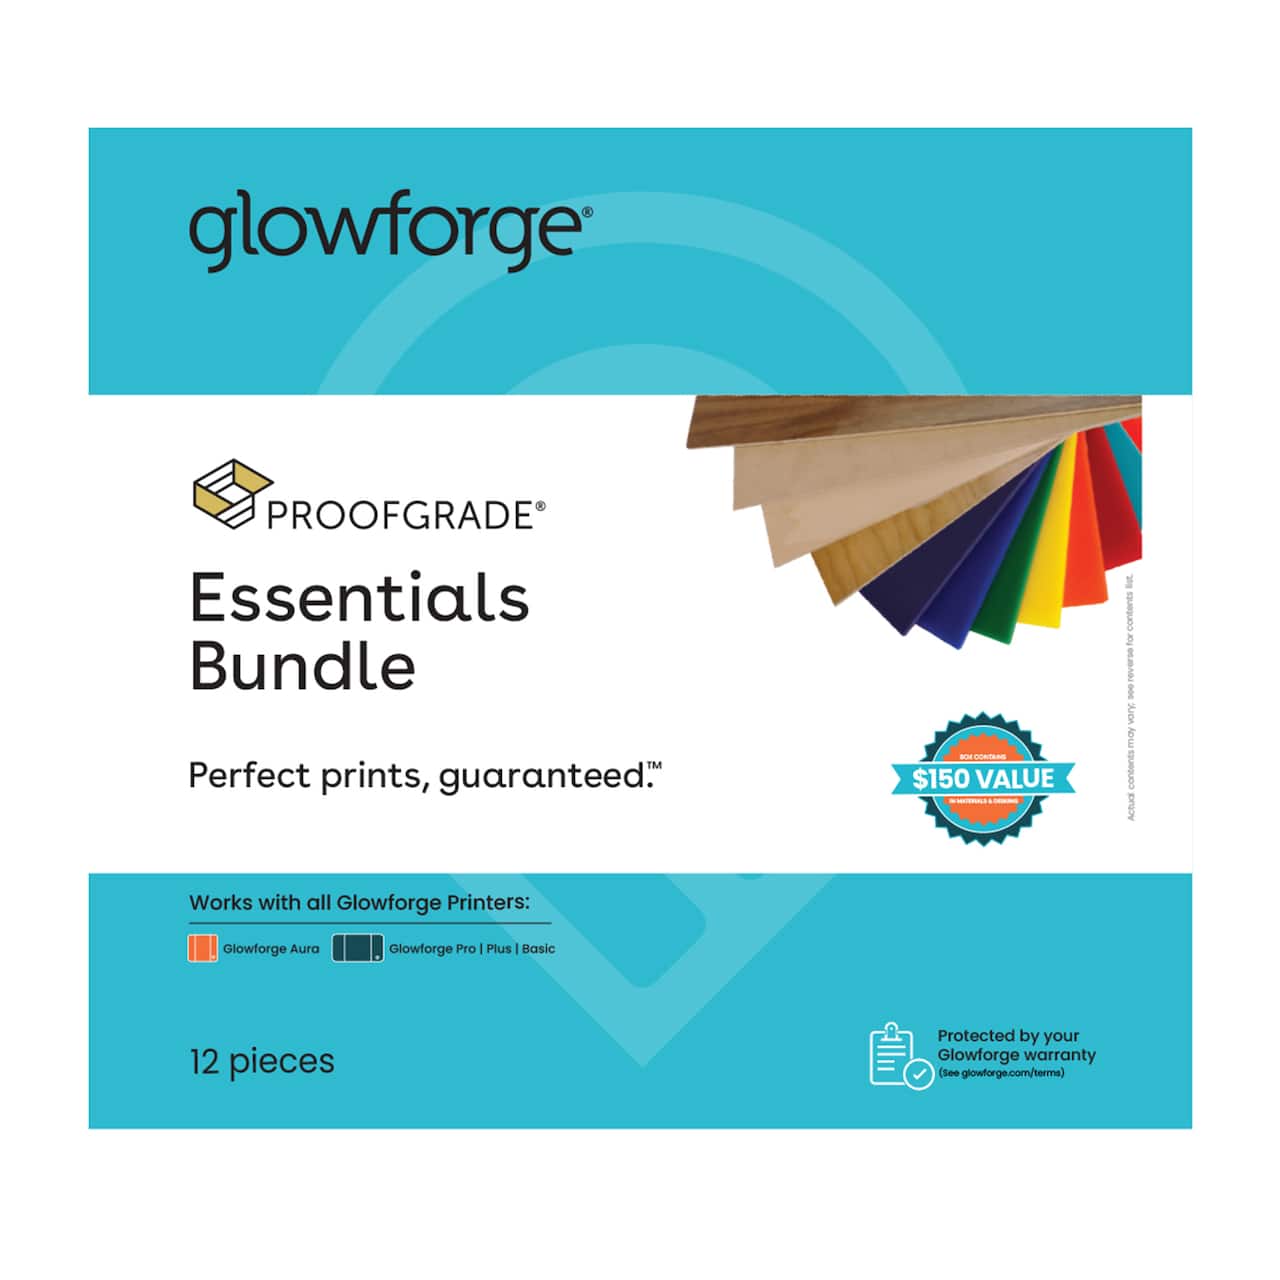 Glowforge® Proofgrade® Essentials Bundle